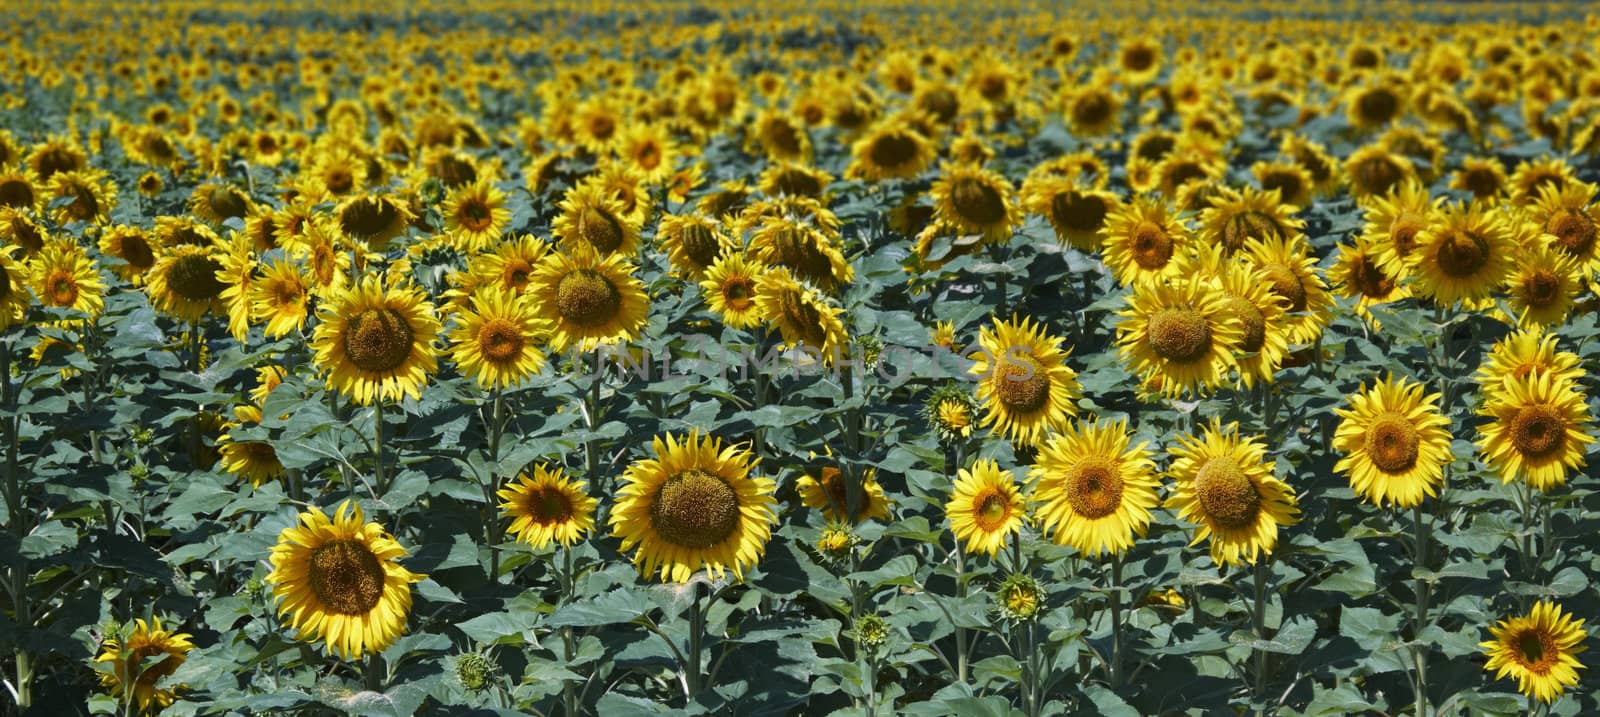 ITALY, Tuscany, Chiarone, countryside, sunflowers field